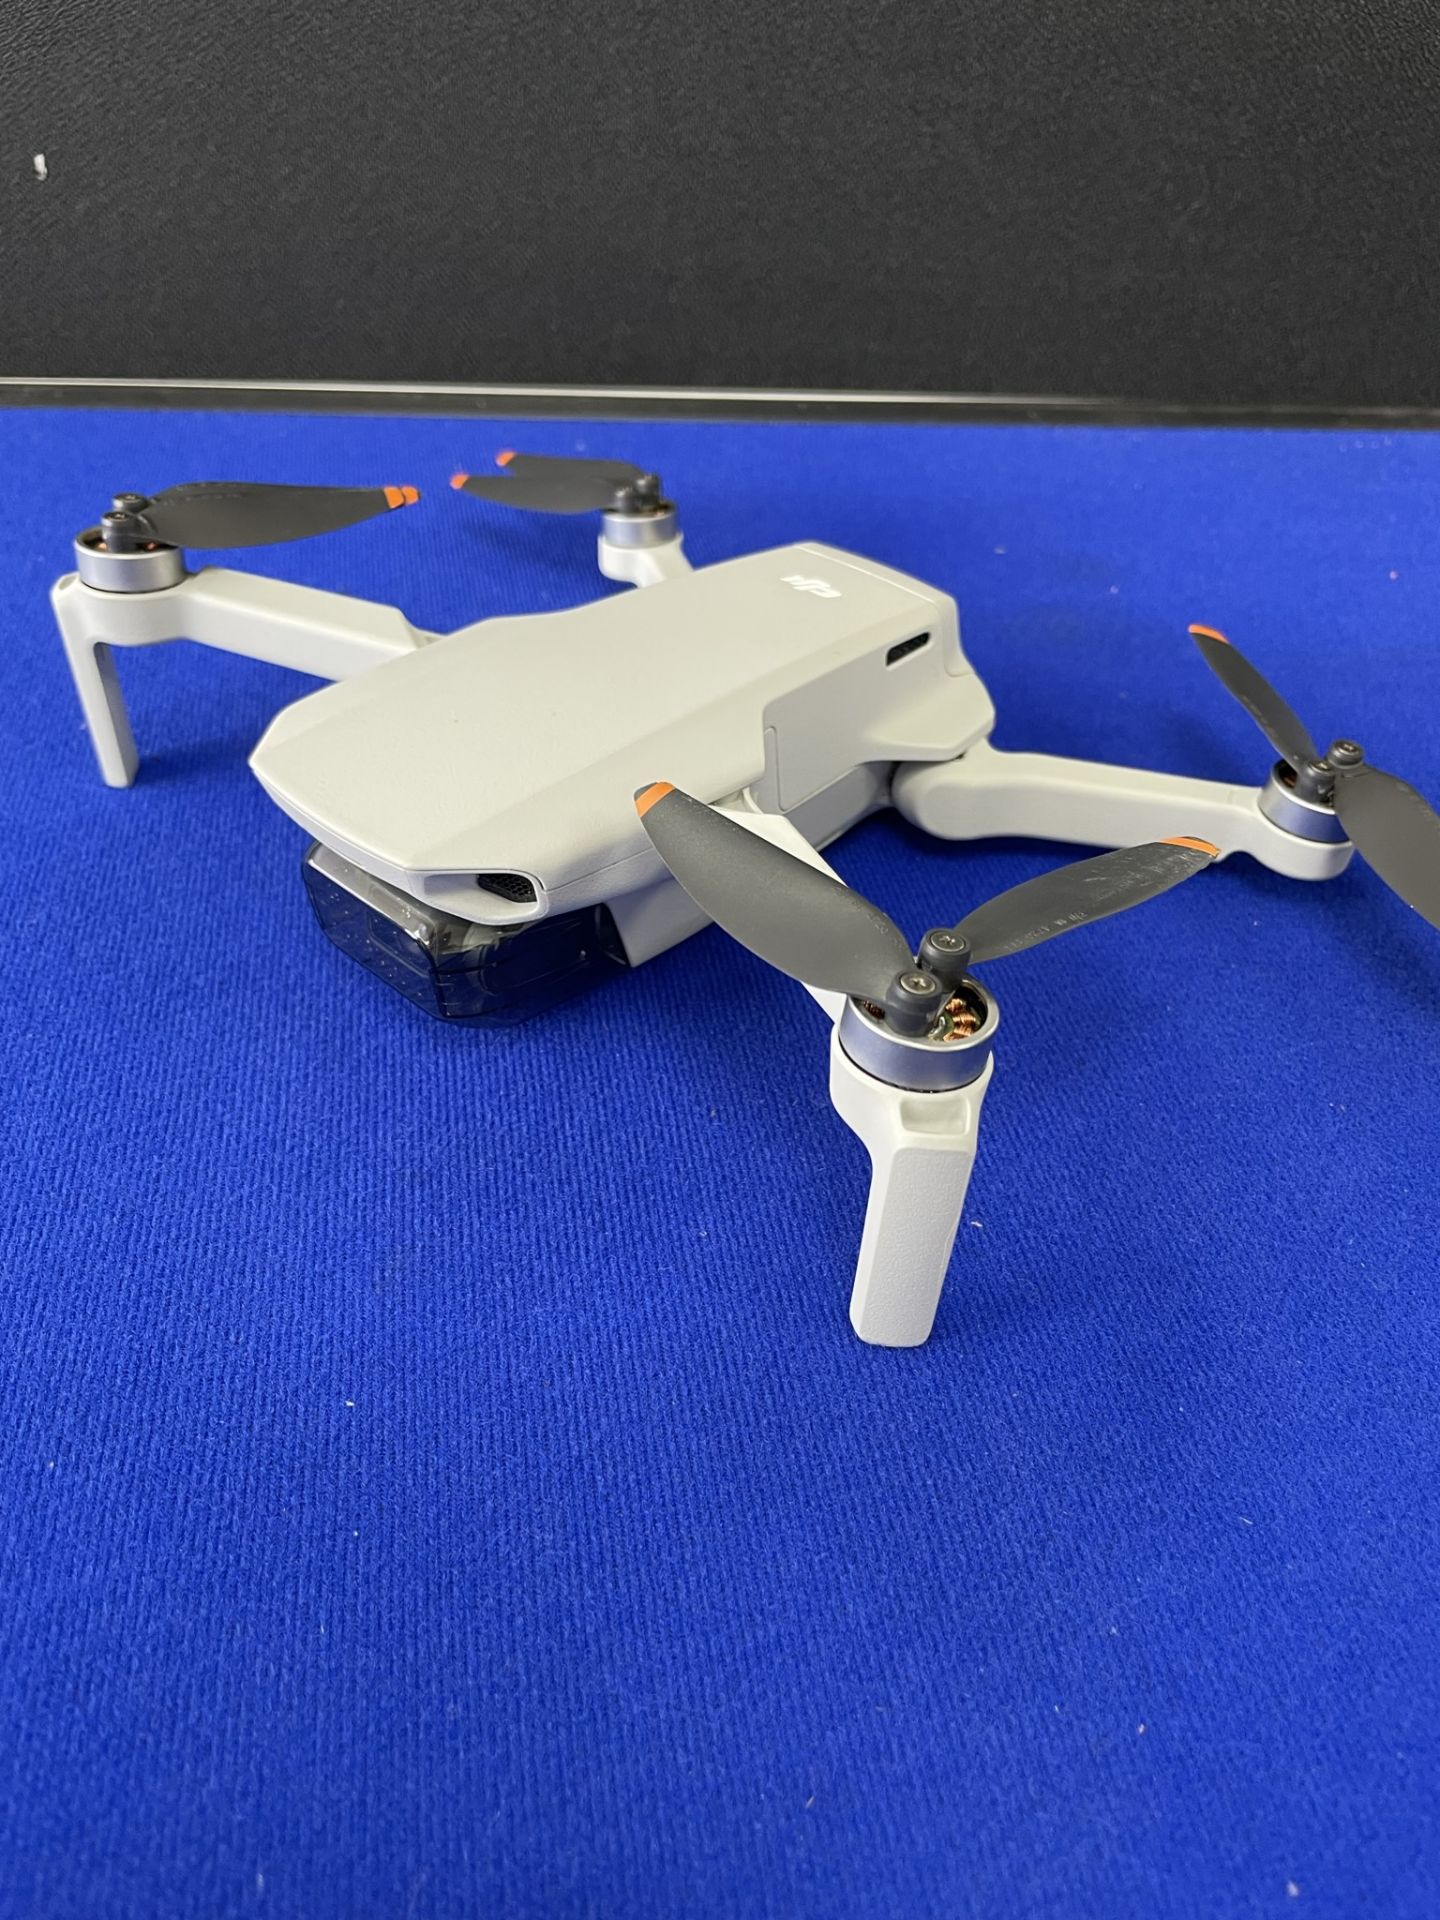 DJI Mini 2 Fly More Combo Drone - Image 2 of 11